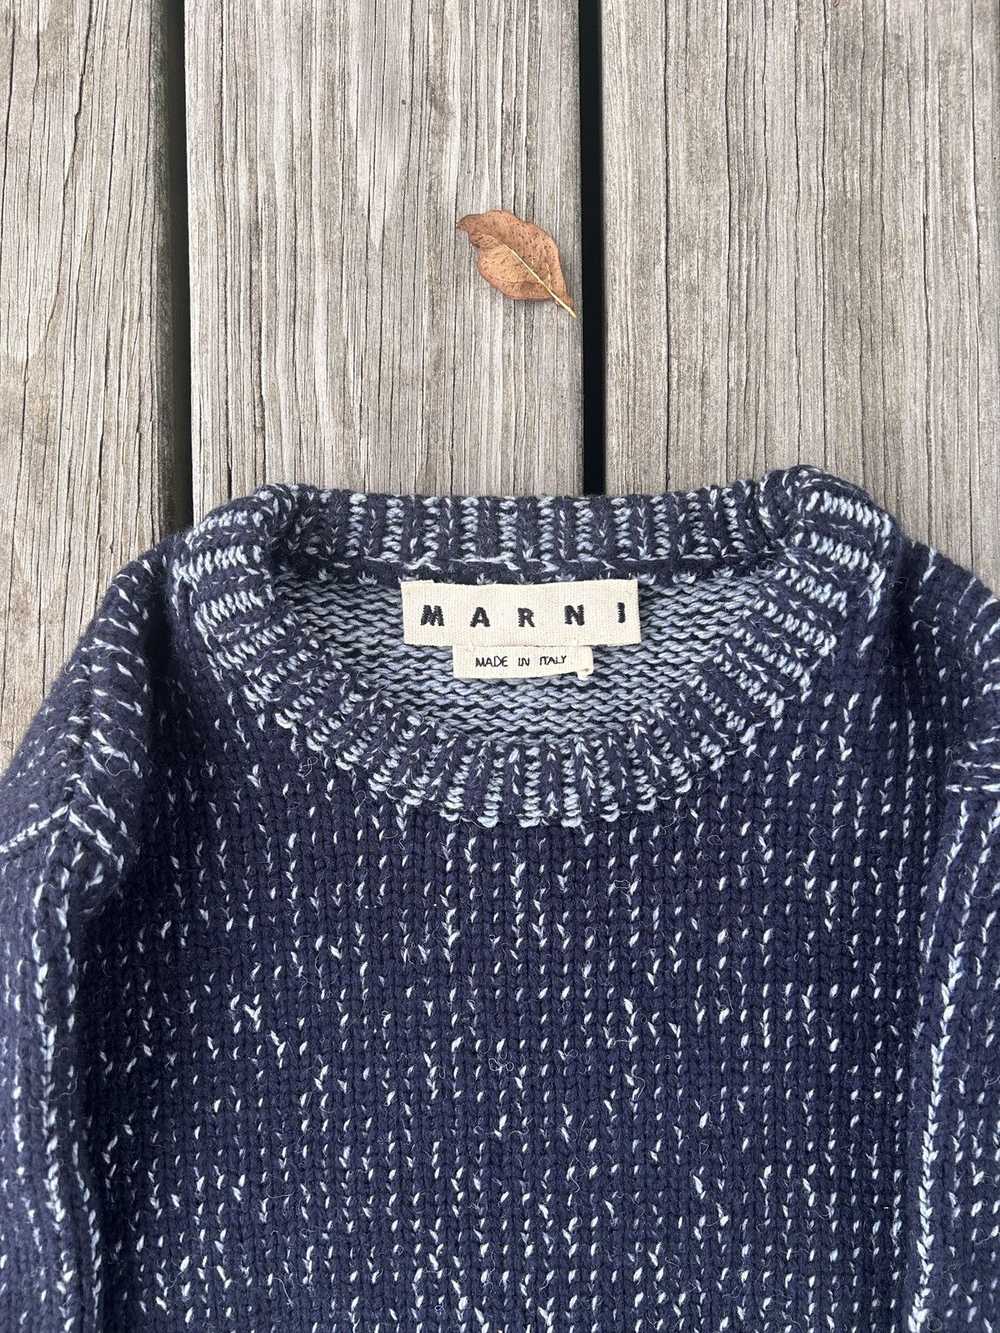 Marni Marni Mohair Sweater - image 4